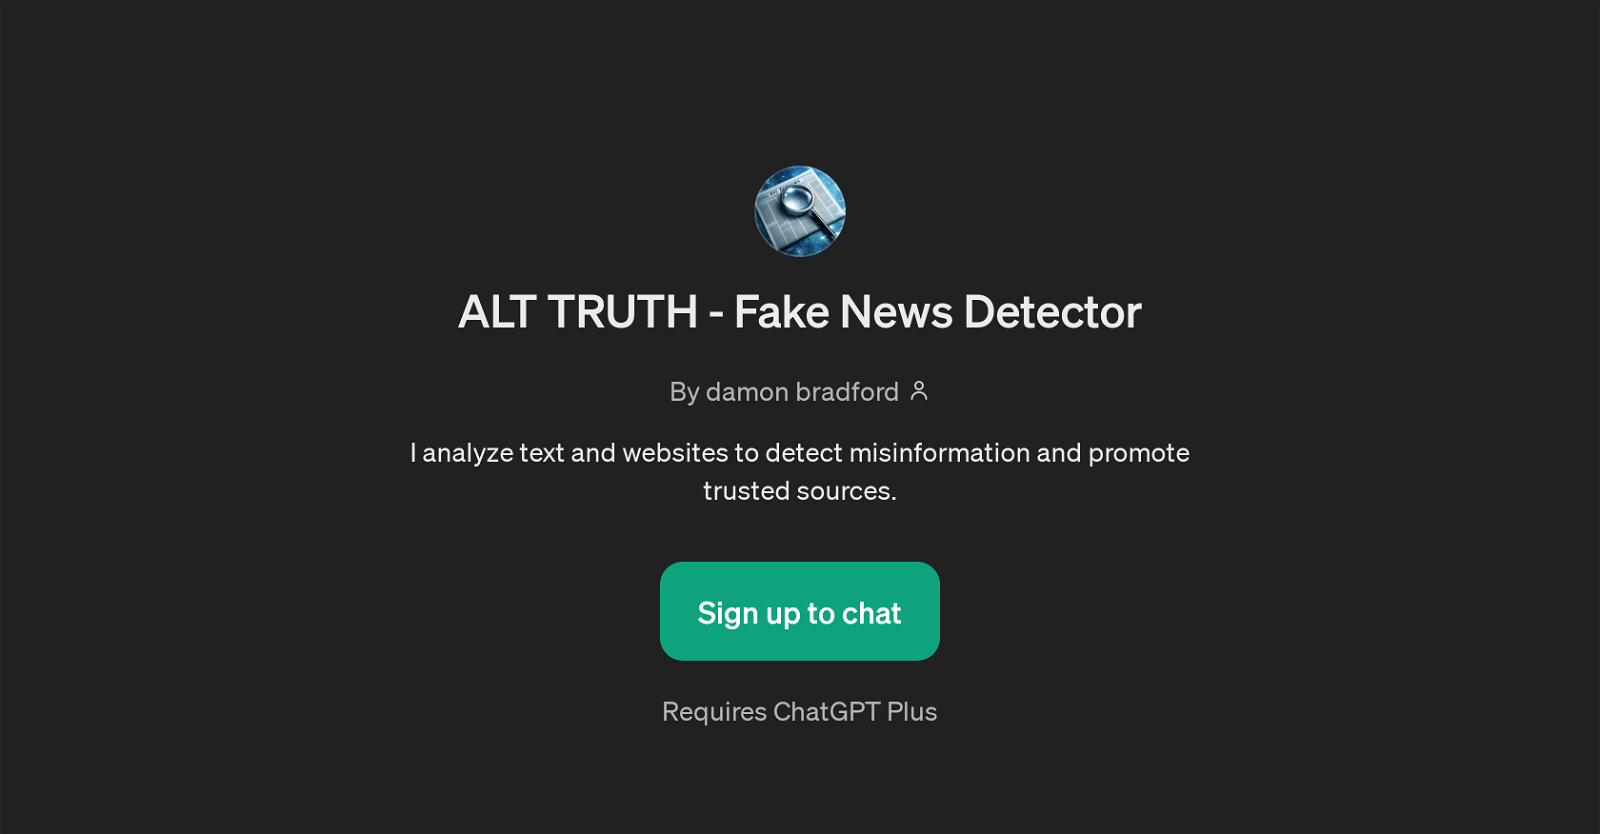 ALT TRUTH website